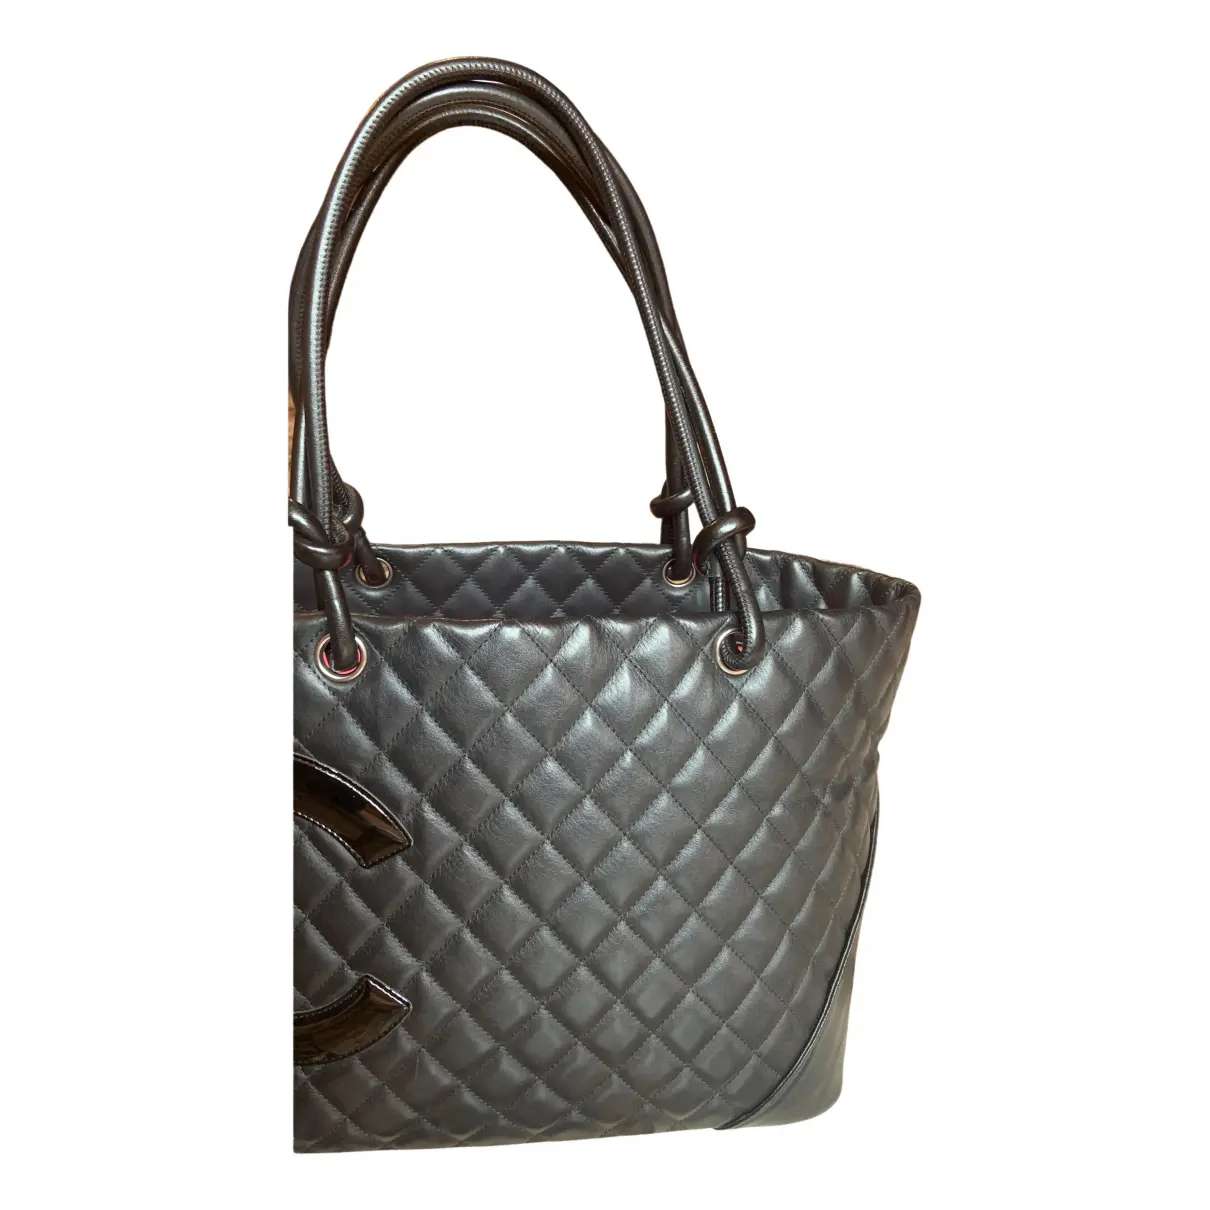 Buy Chanel Cambon leather handbag online - Vintage